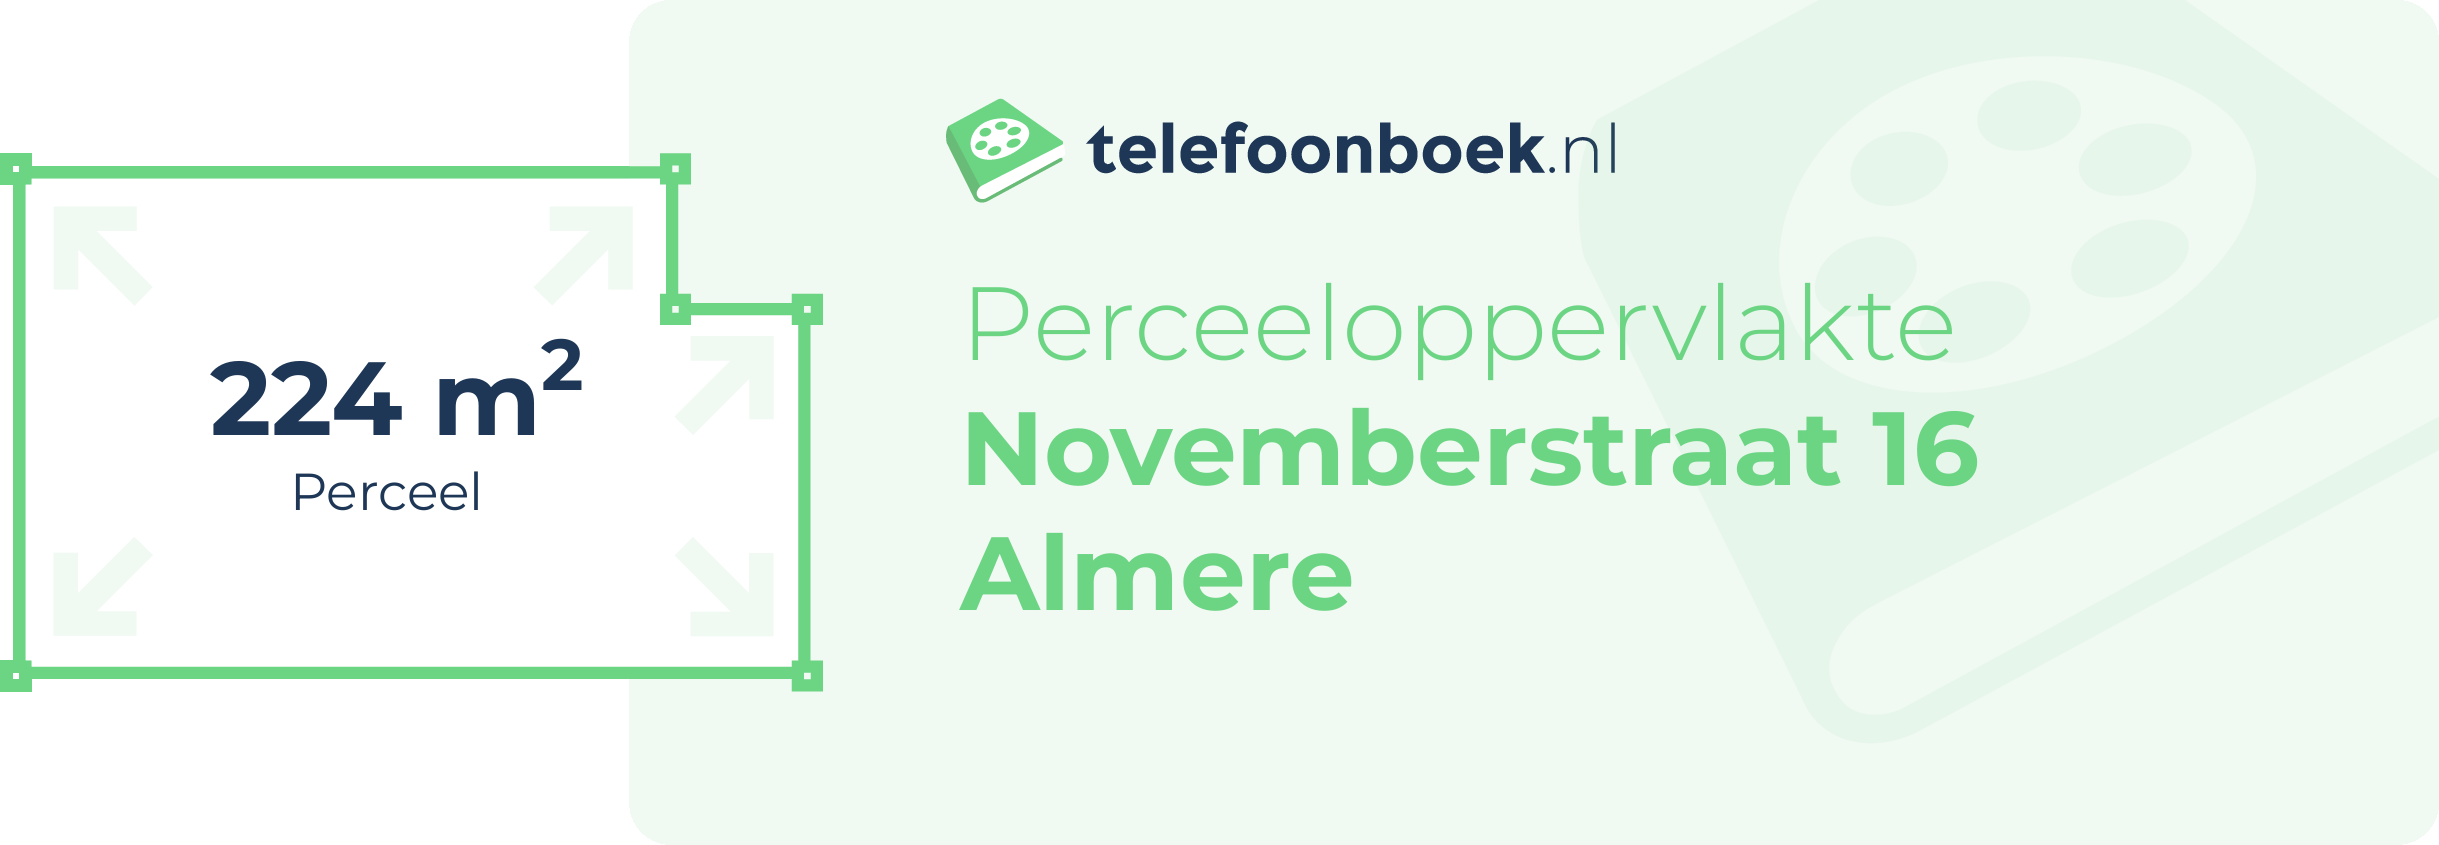 Perceeloppervlakte Novemberstraat 16 Almere